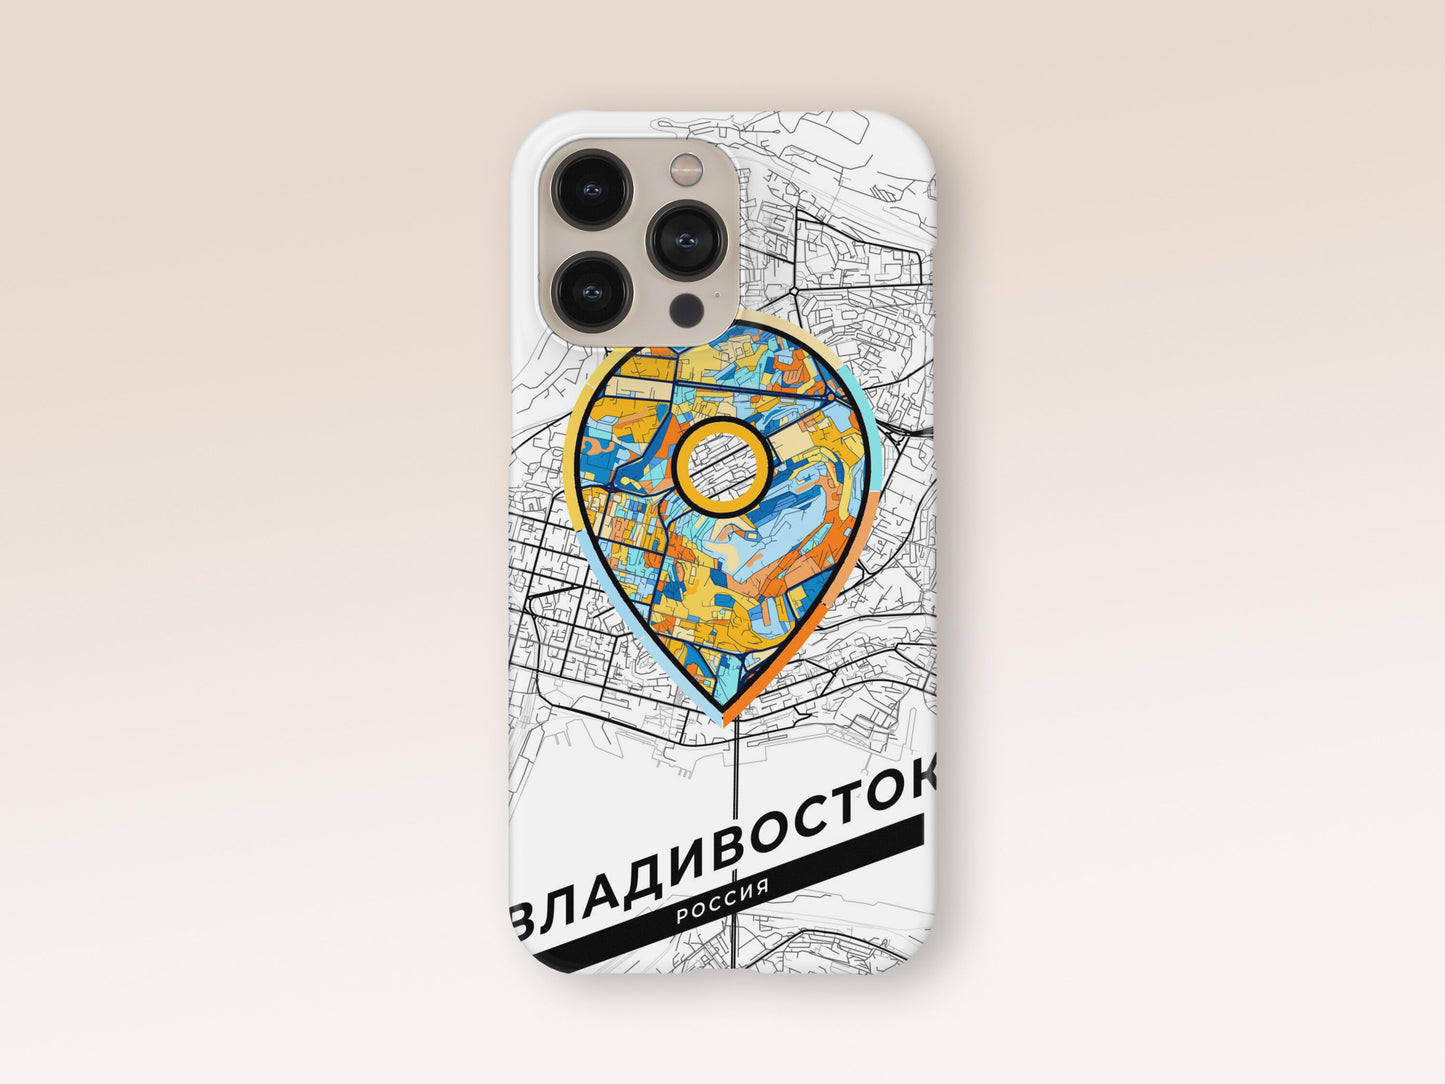 Vladivostok Russia slim phone case with colorful icon 1